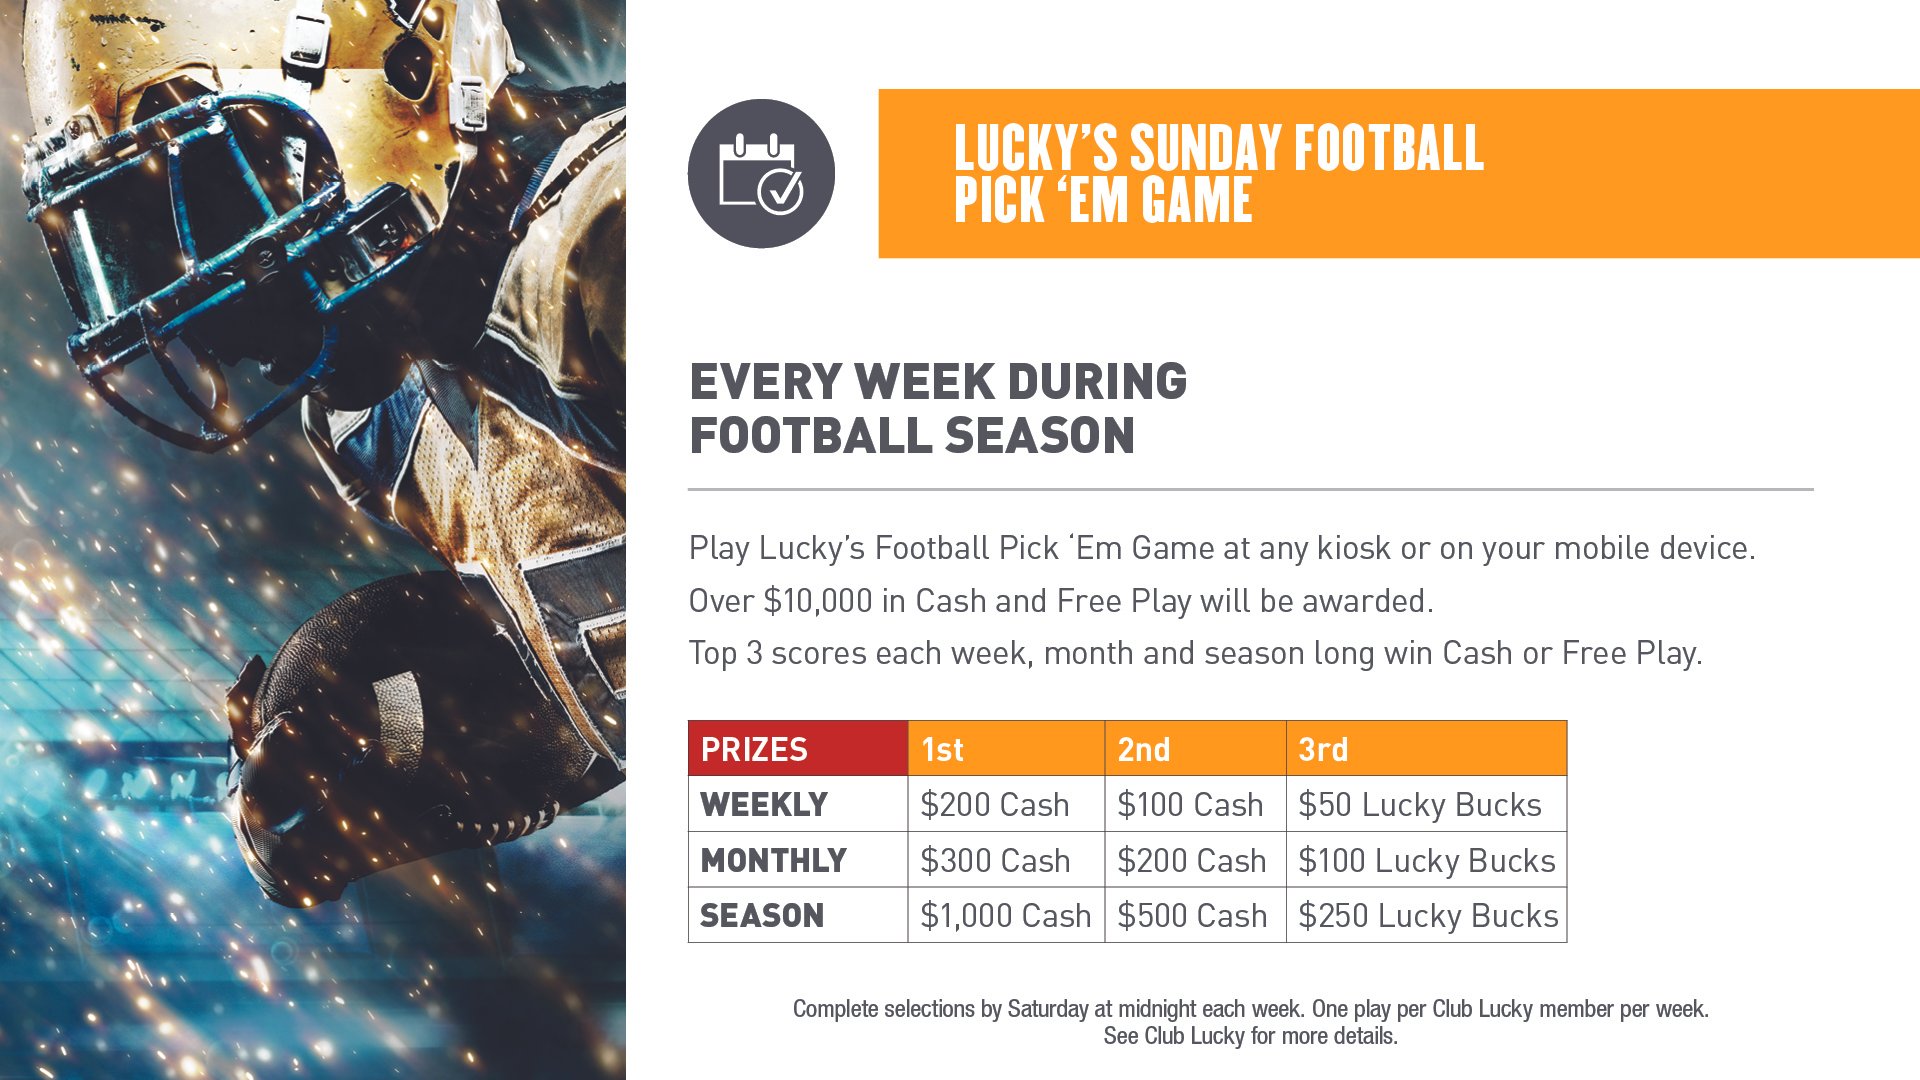 LUCKY'S SUNDAY FOOTBALL PICK 'EM GAME — Lucky Dog Casino